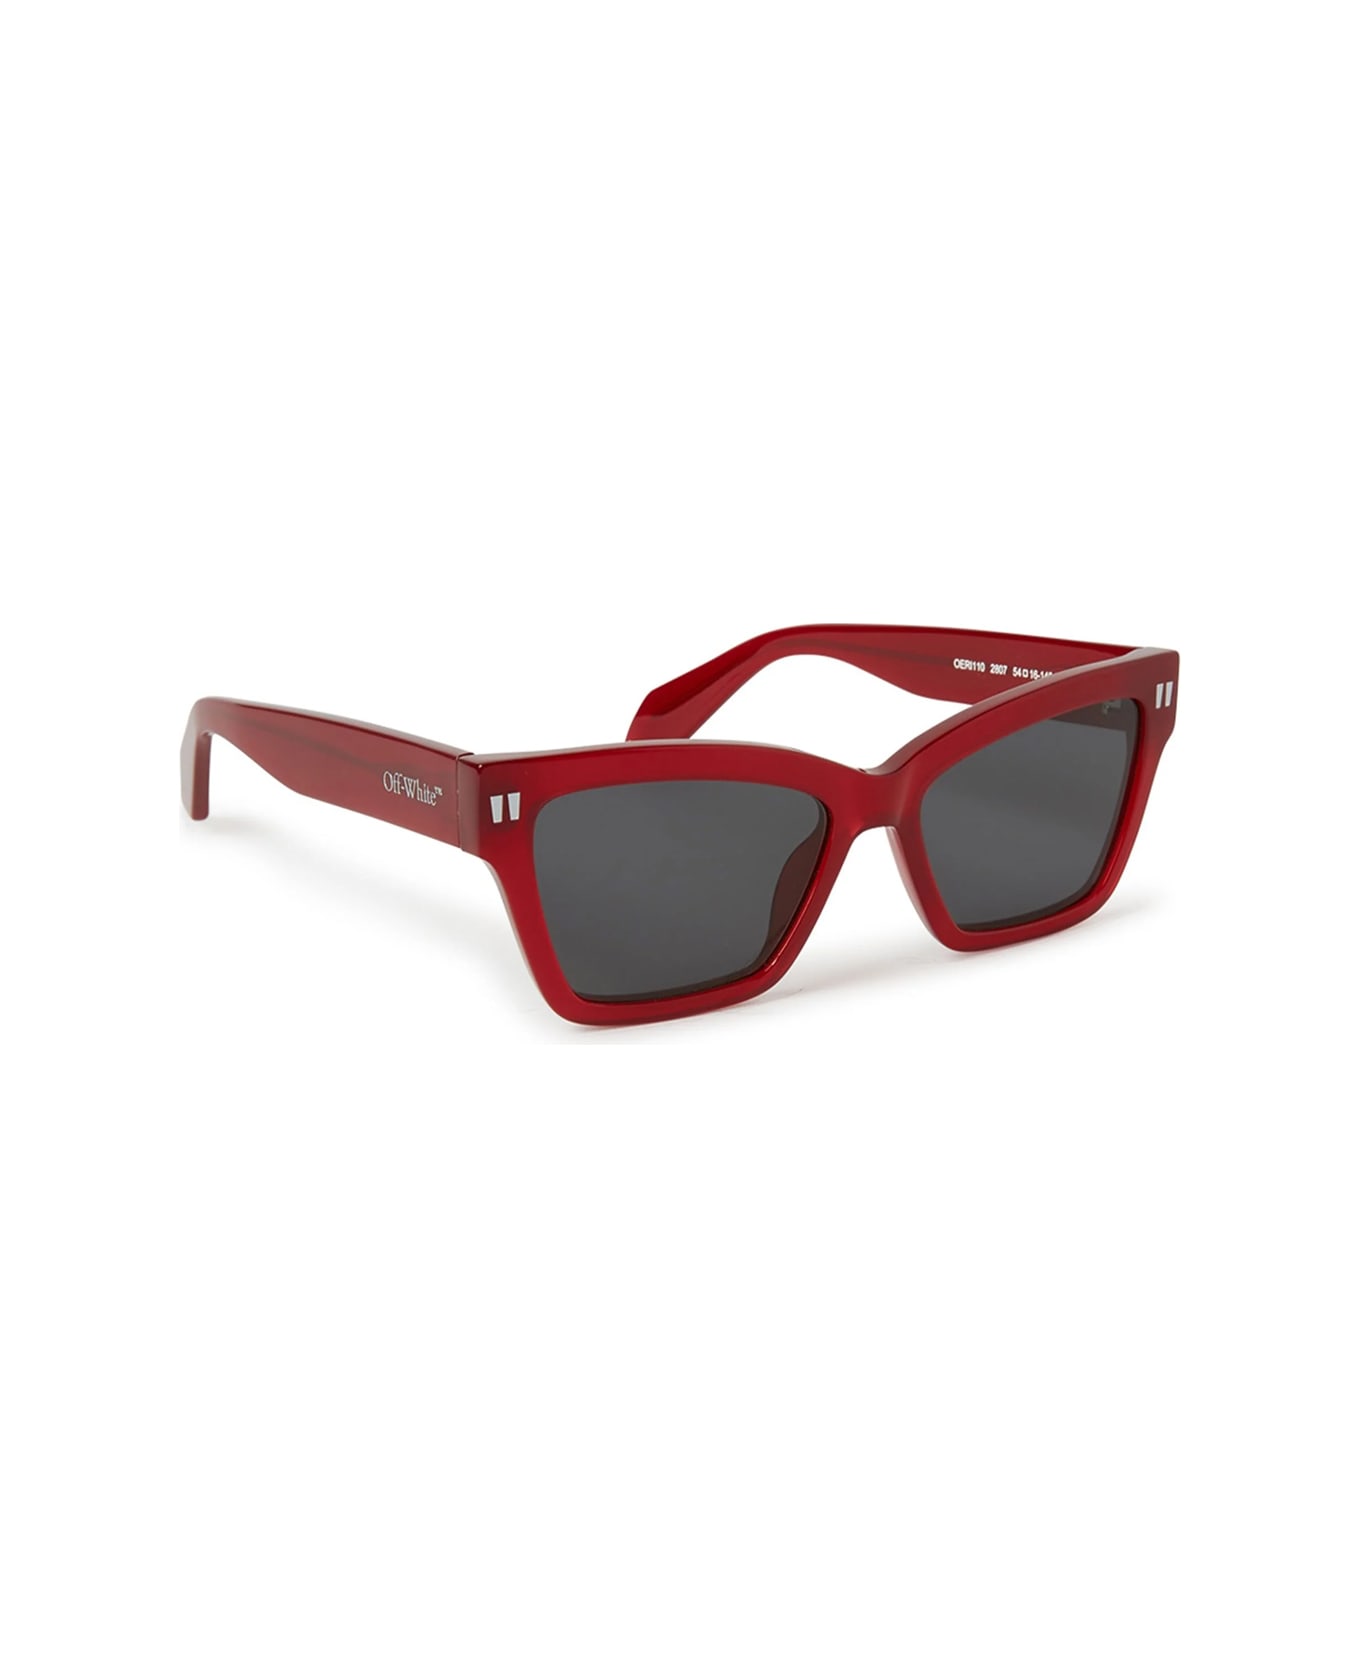 Off-White Oeri110 Cincinnati 2807 Burgundy Sunglasses - Rosso サングラス